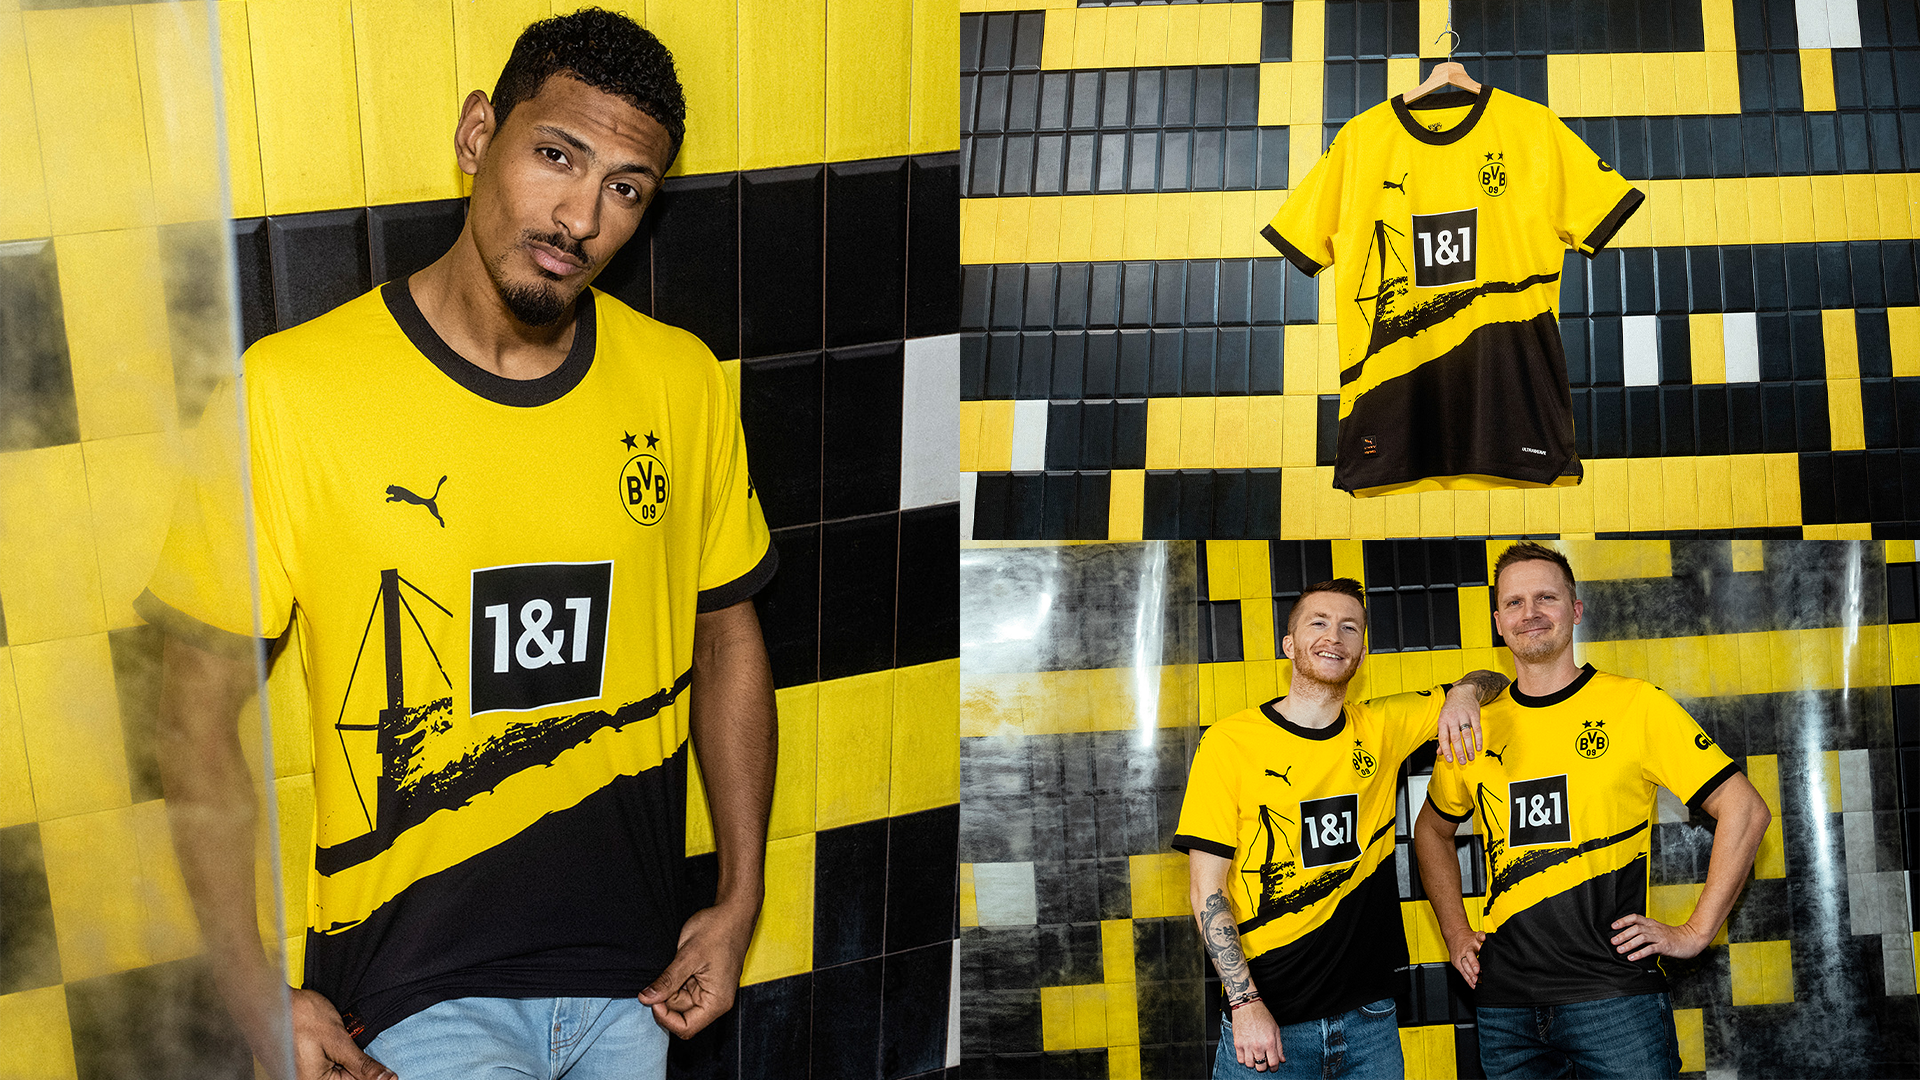 Borussia Dortmund Kit & Football Shirts, 2023-24